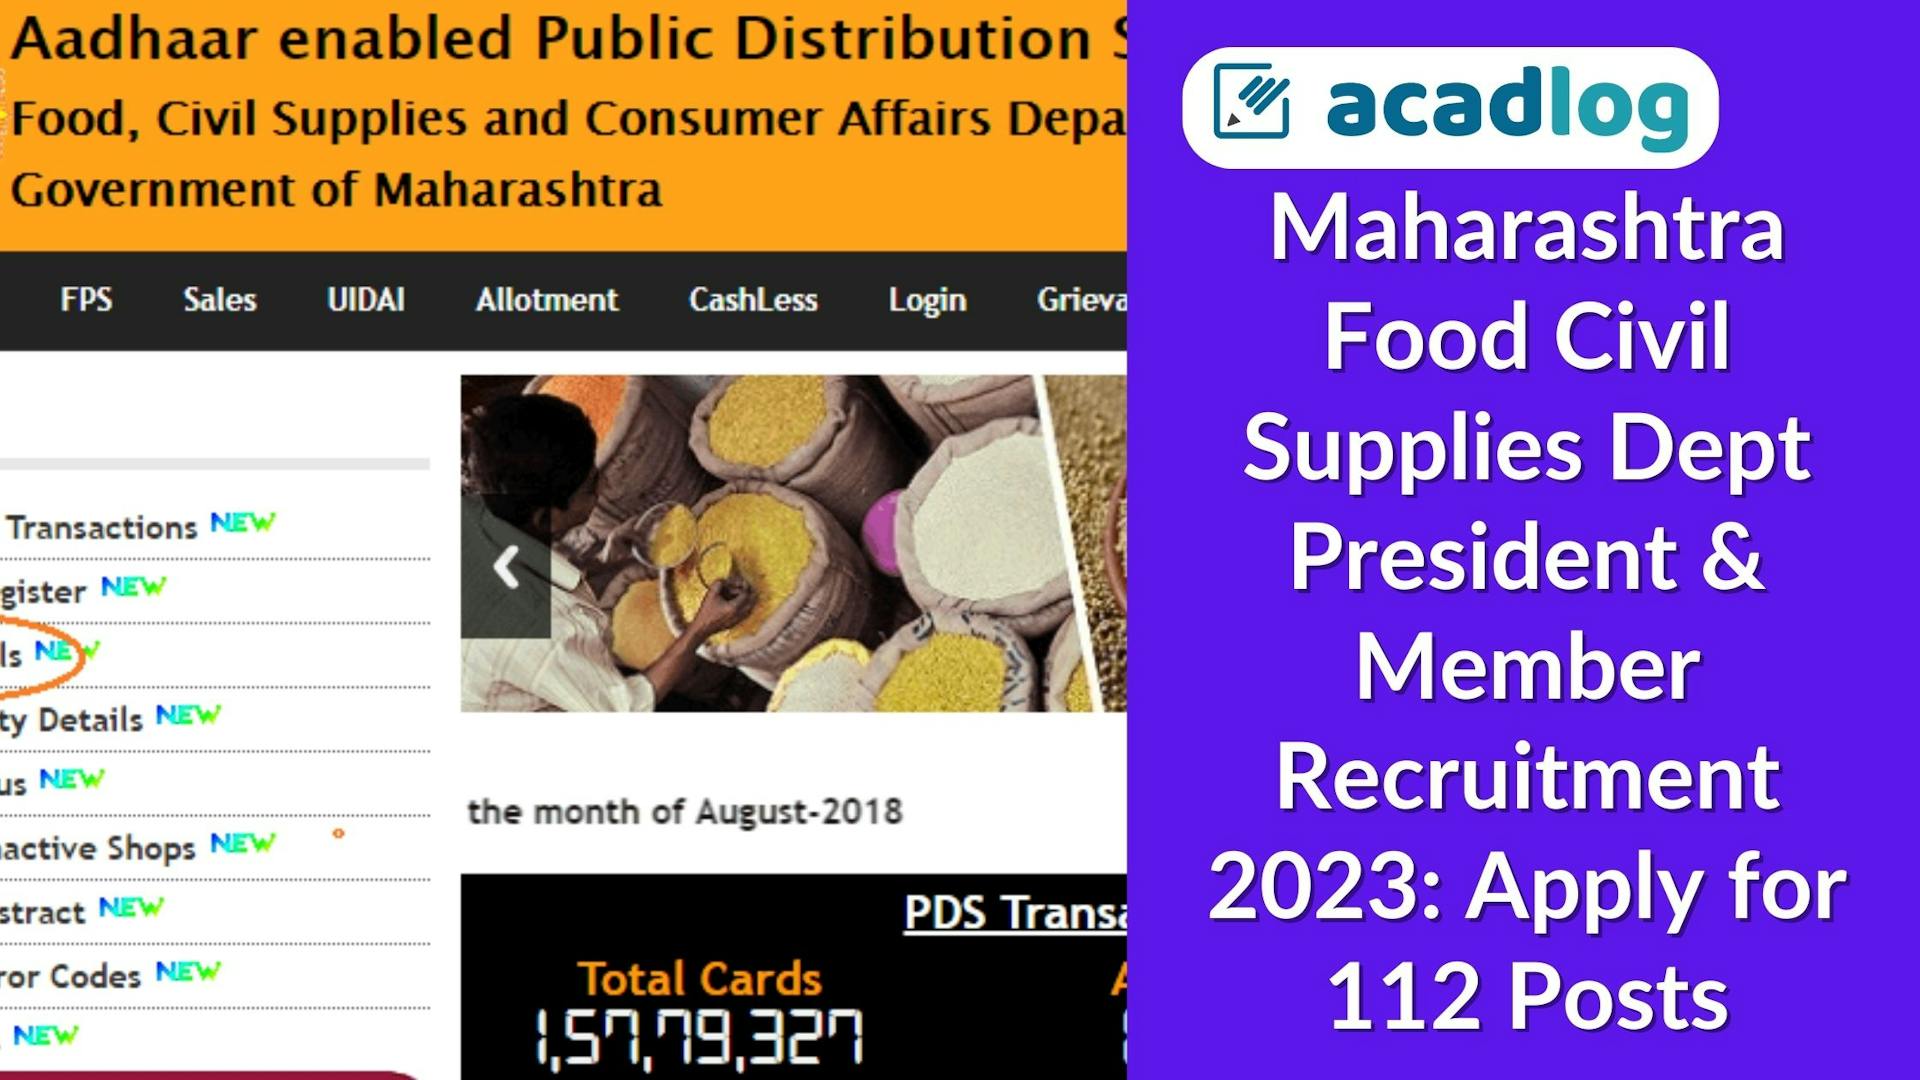 Maharashtra Food Civil Supplies Dept Recruitment 2023: Apply for 112 President & Member Posts